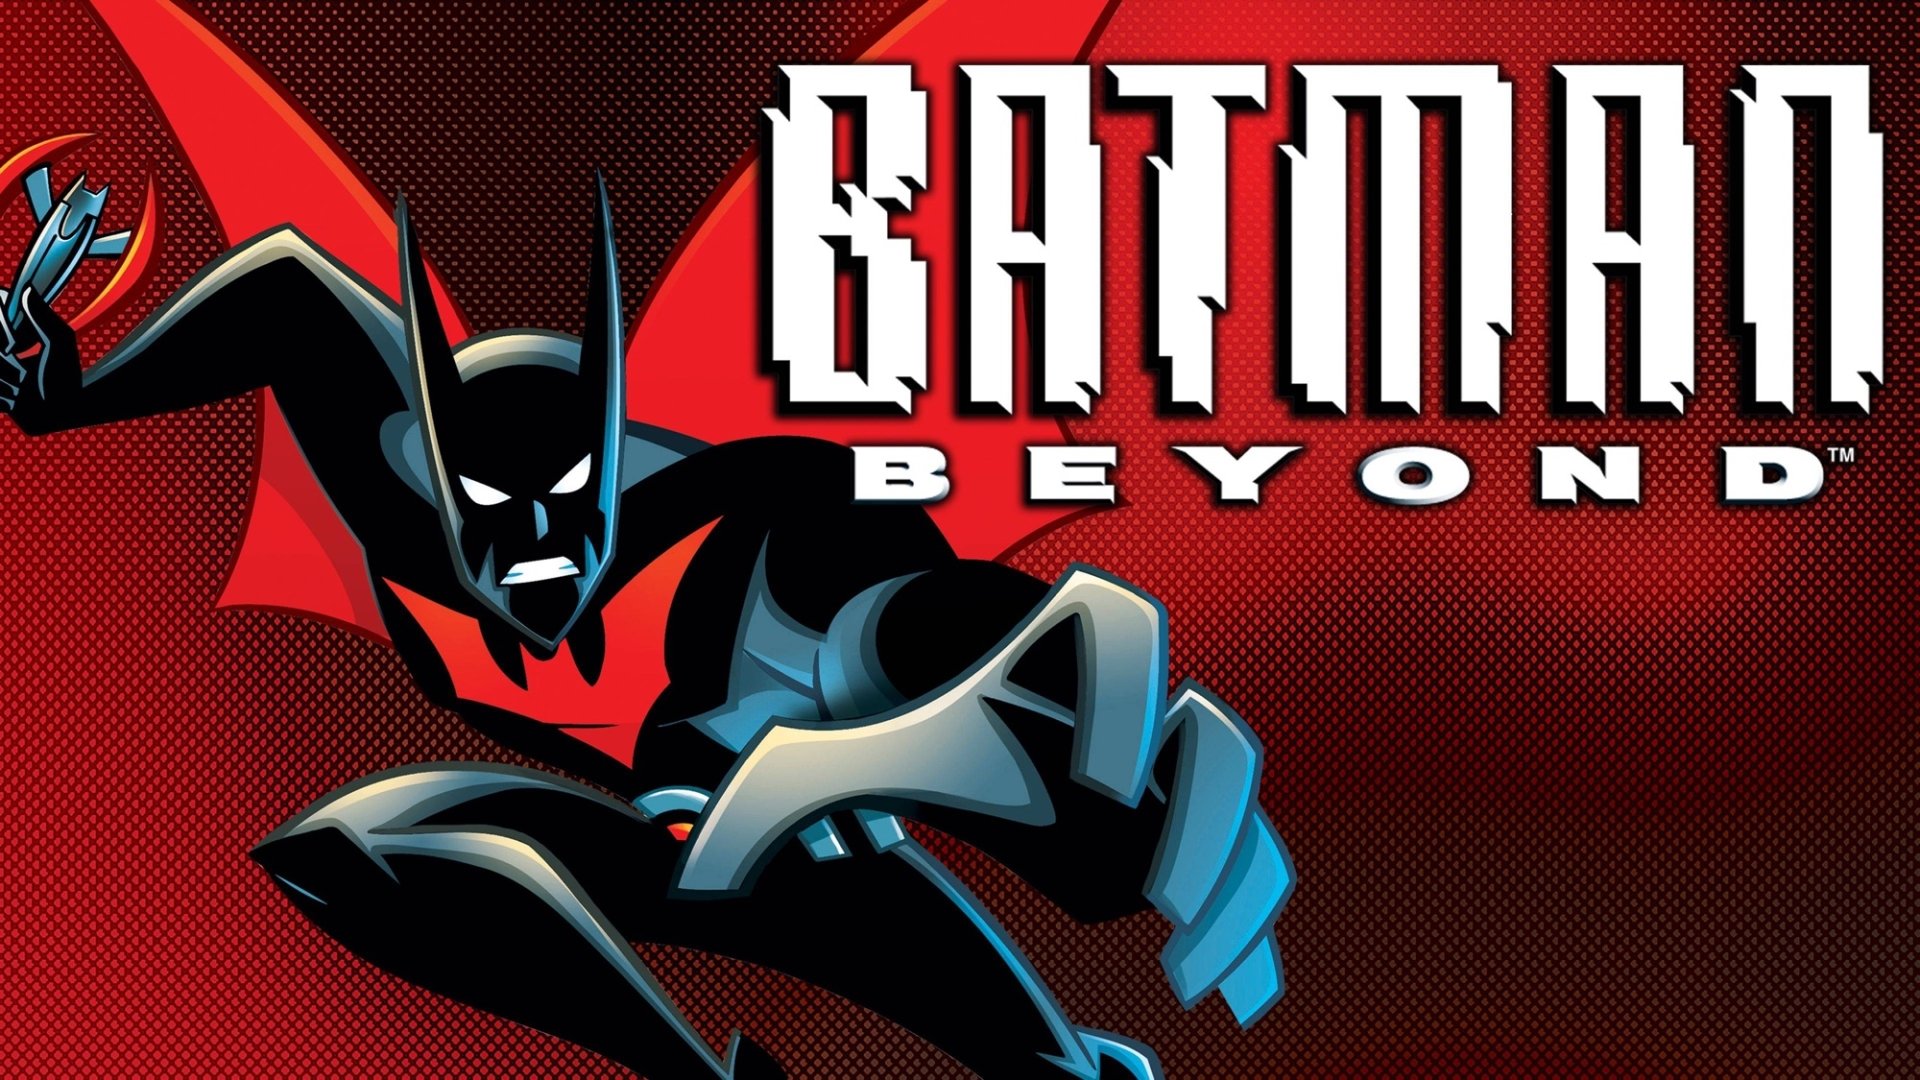 Cartoon Batman Batman Beyond TV Series Red Background 1920x1080